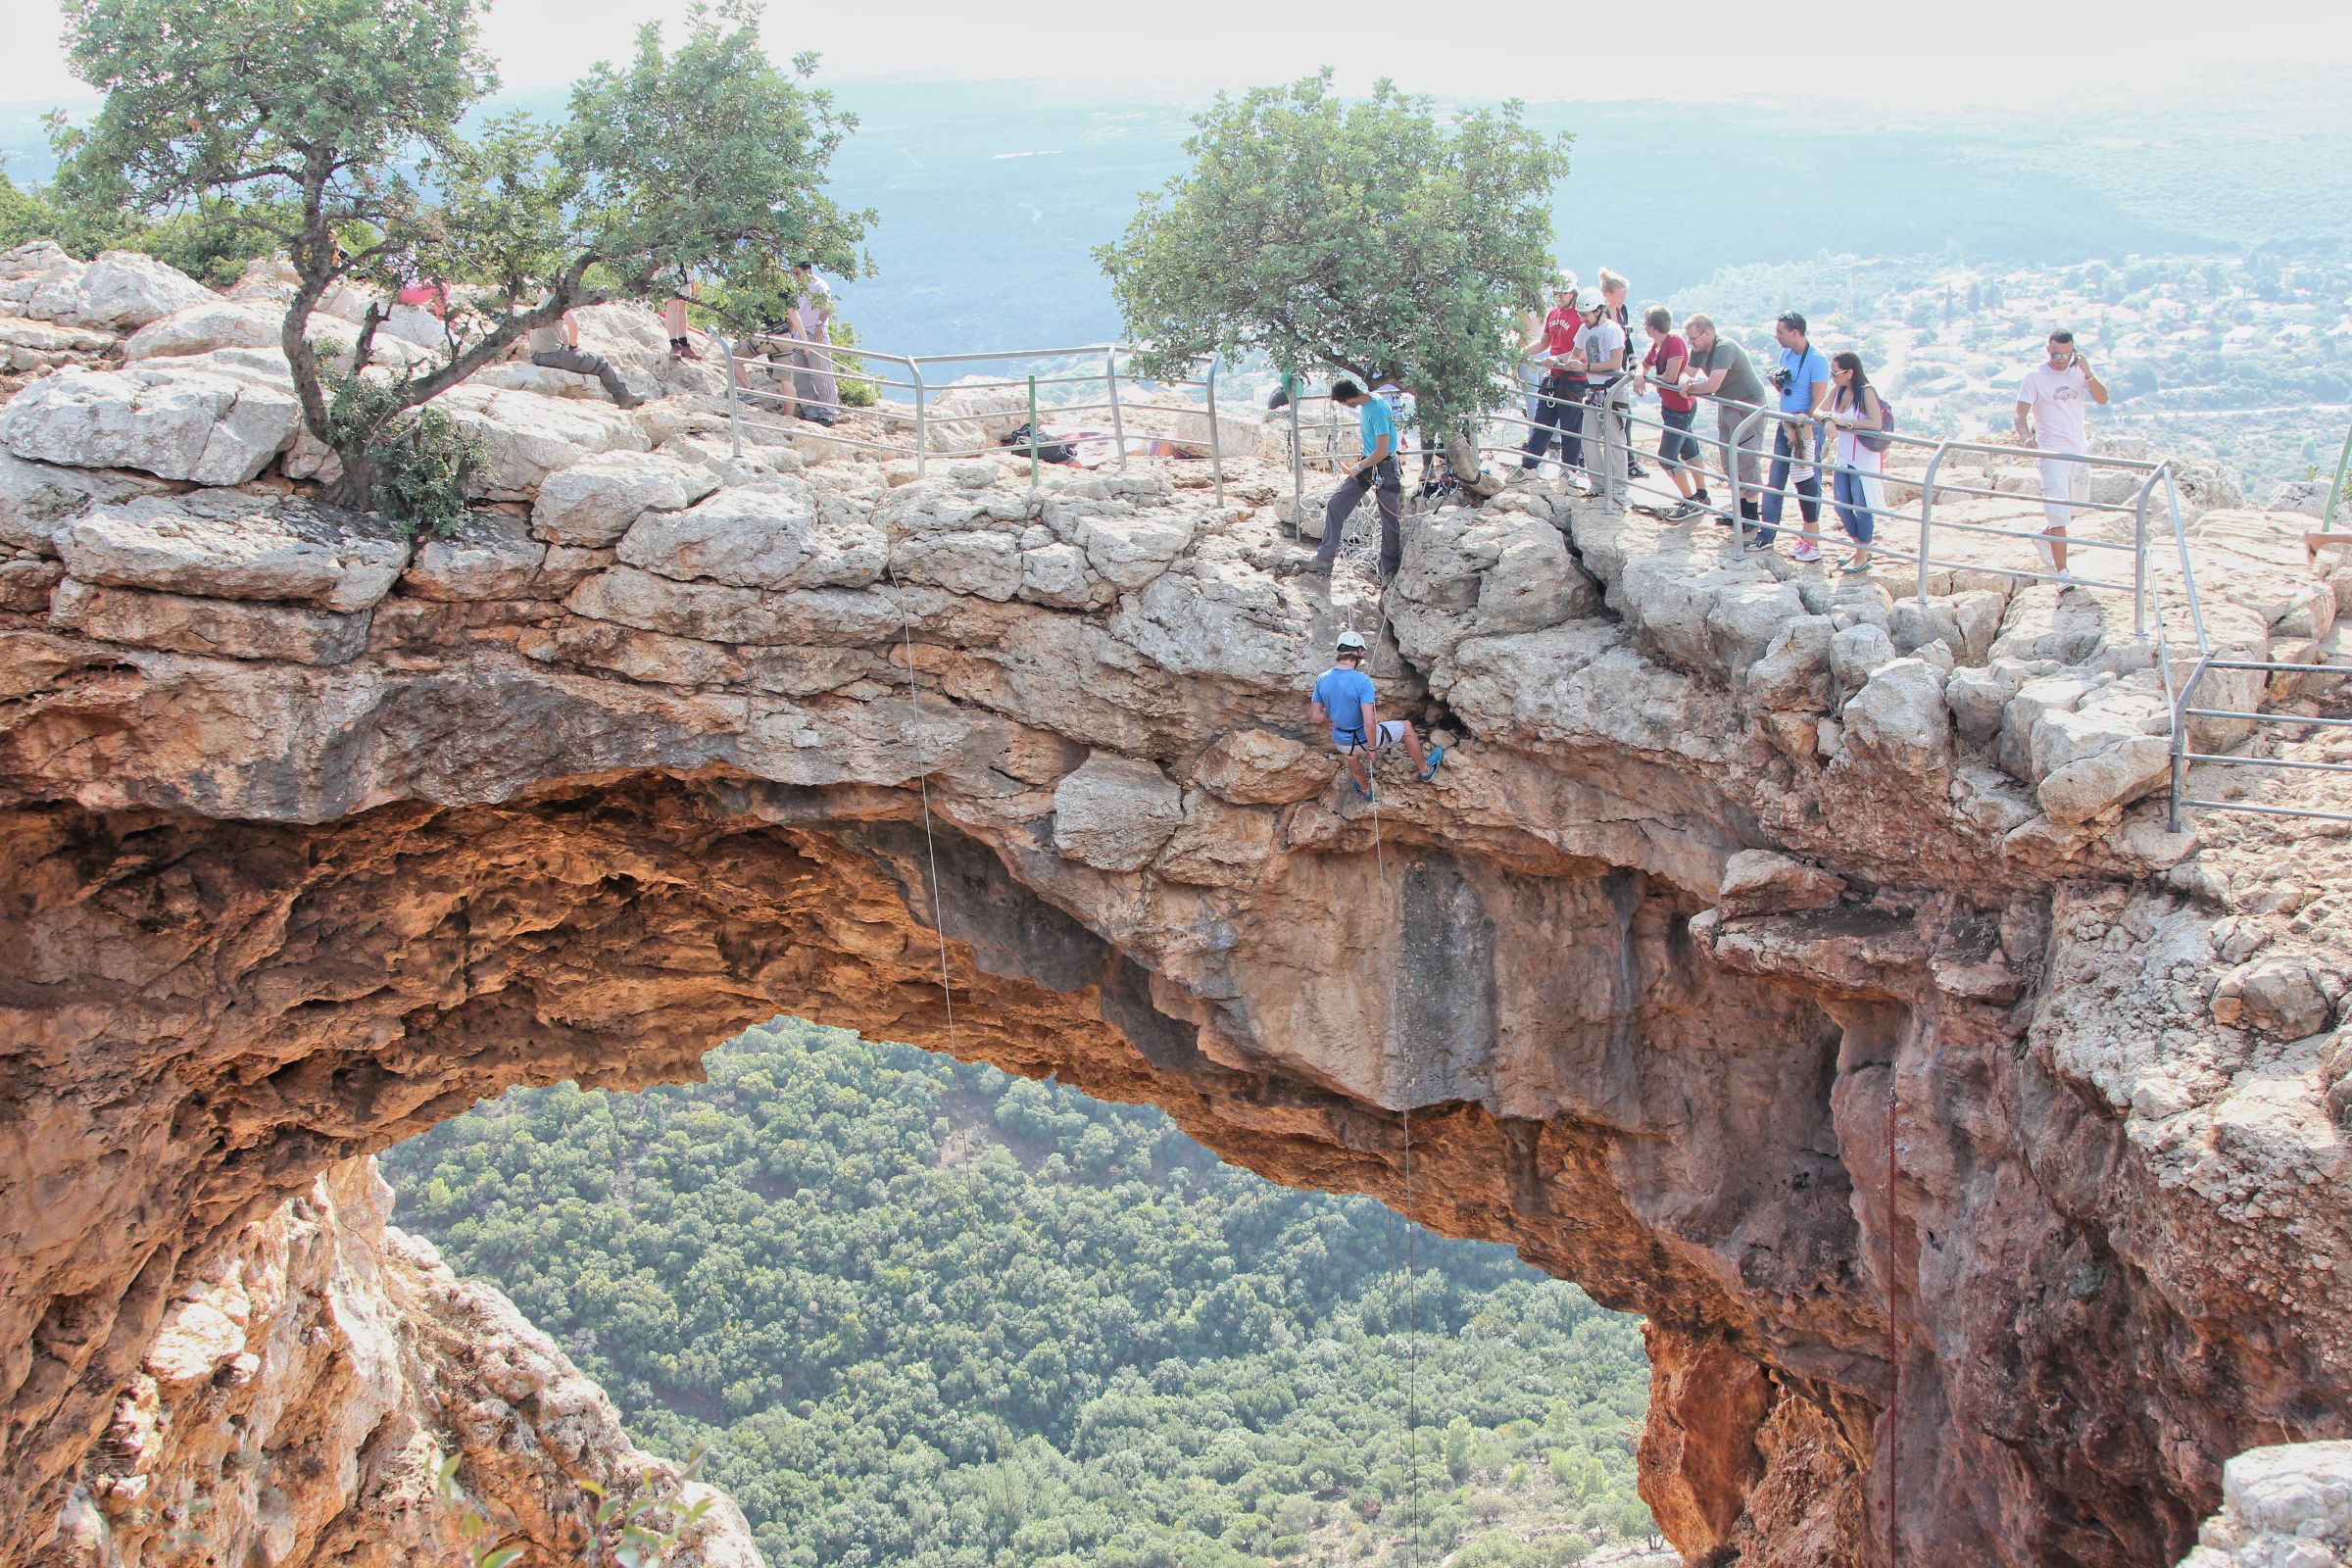 Rock Climbing in Israel